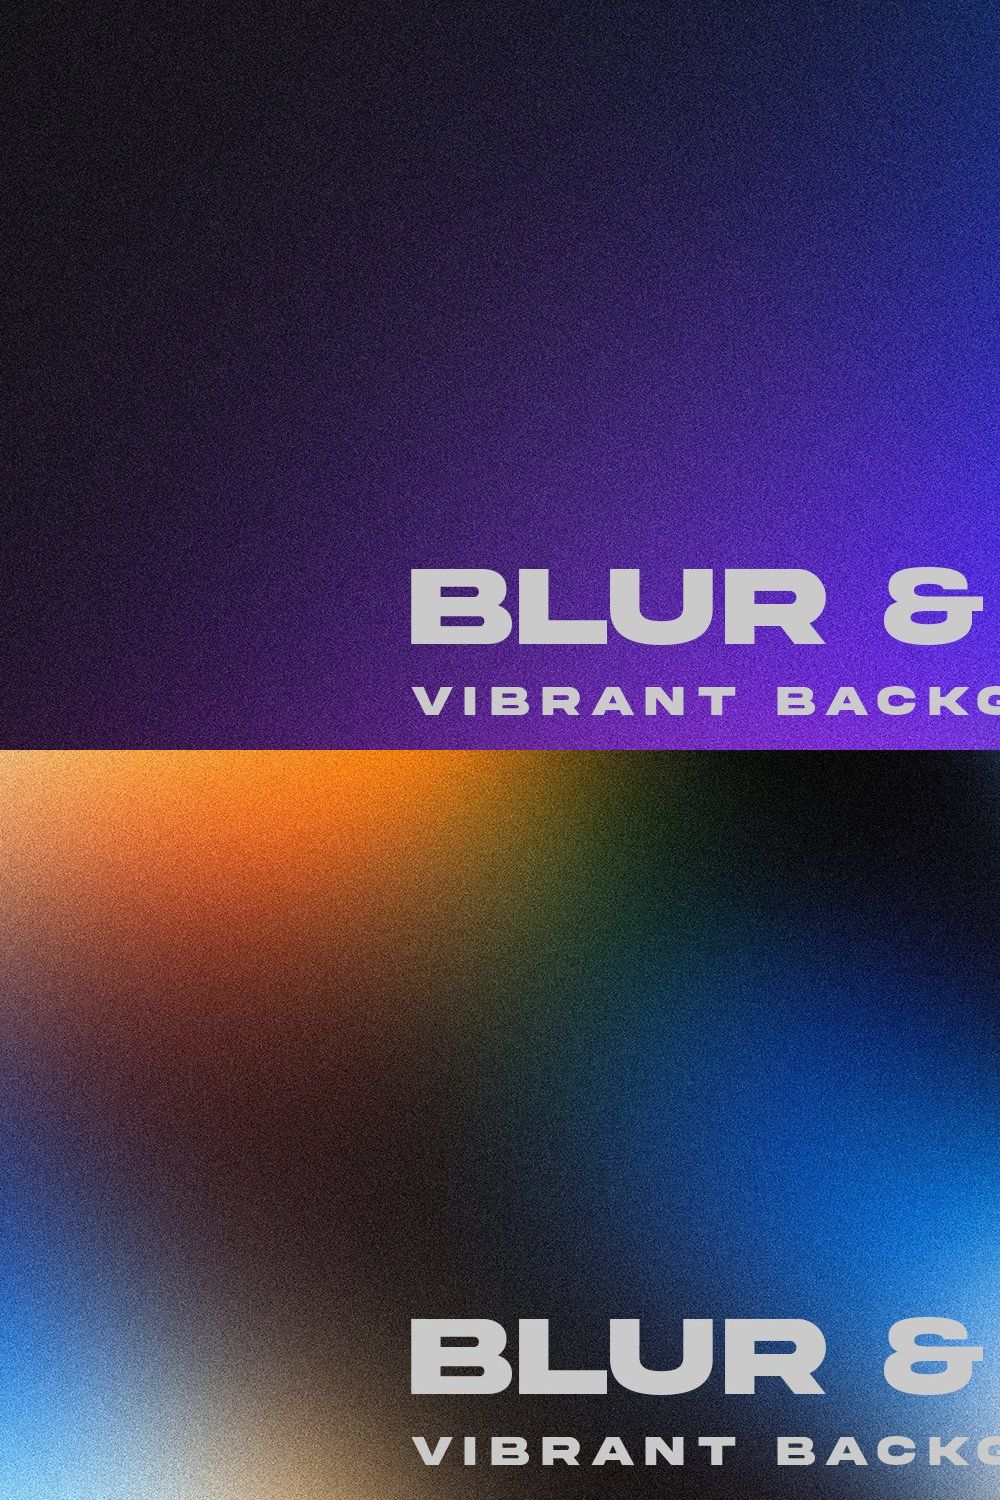 Blur & Noisy Vibrant Background Pack pinterest preview image.